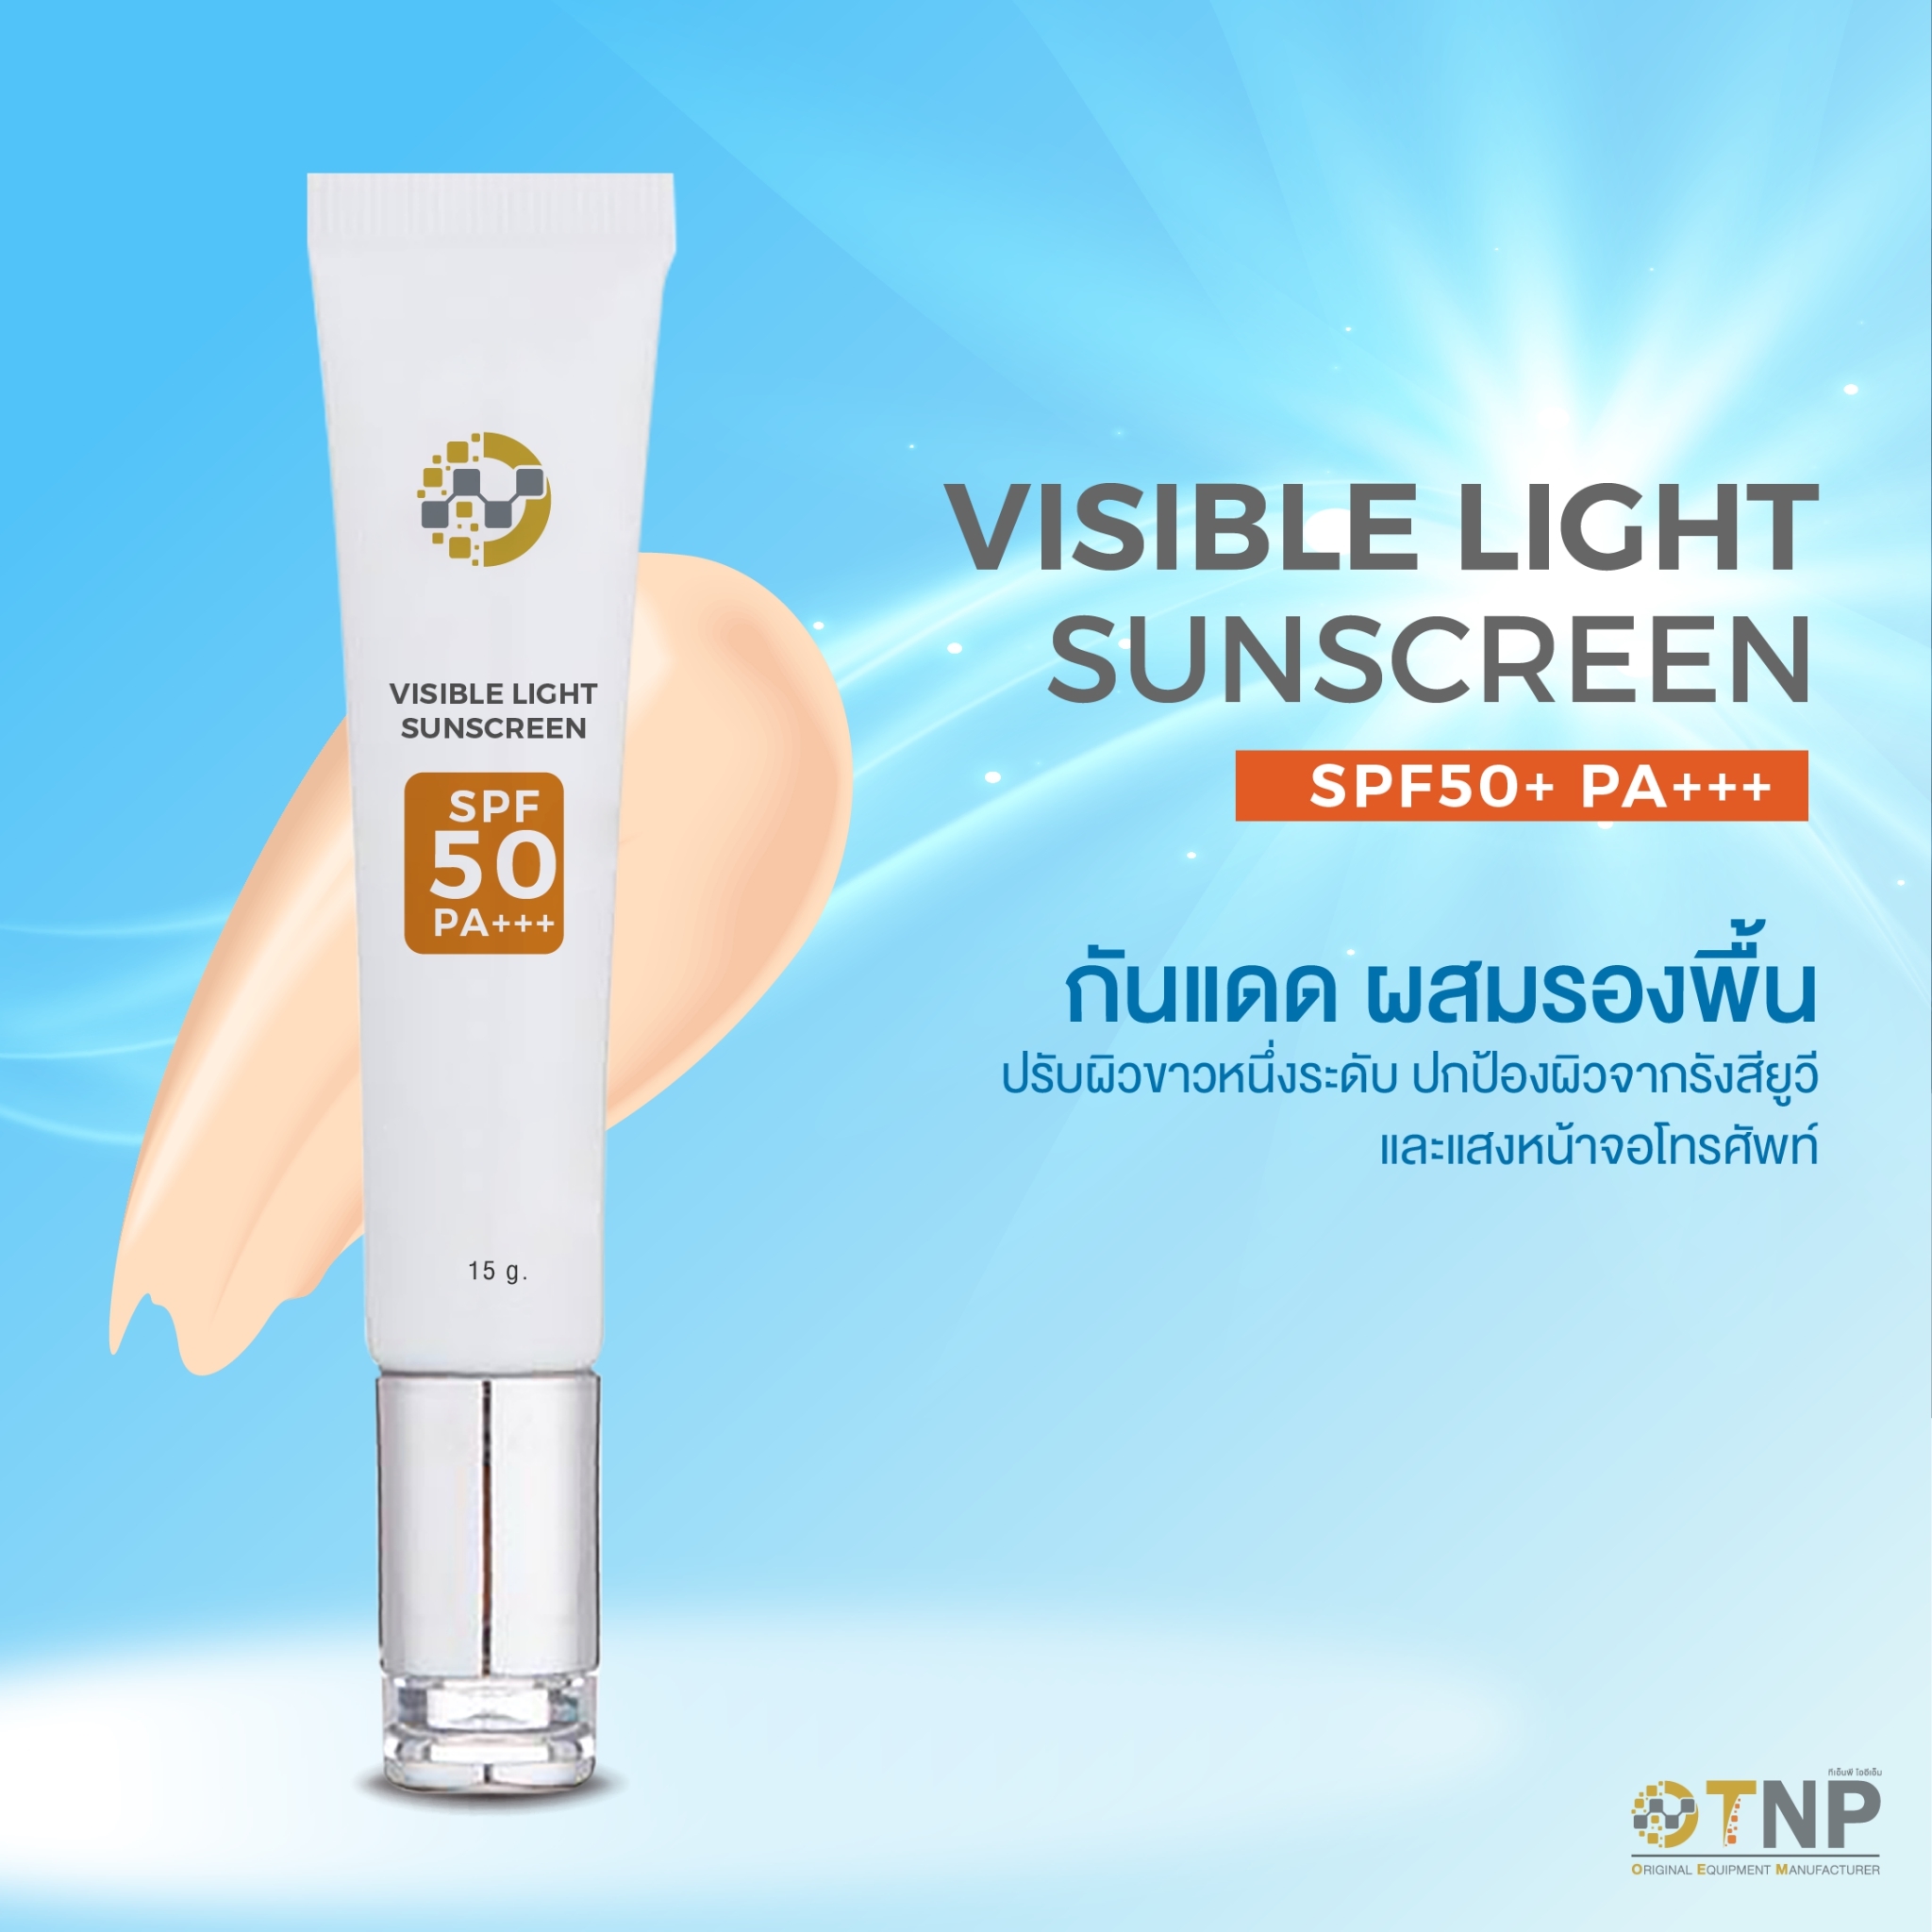 Visible Light Sunscreen SPF 50+ PA+++